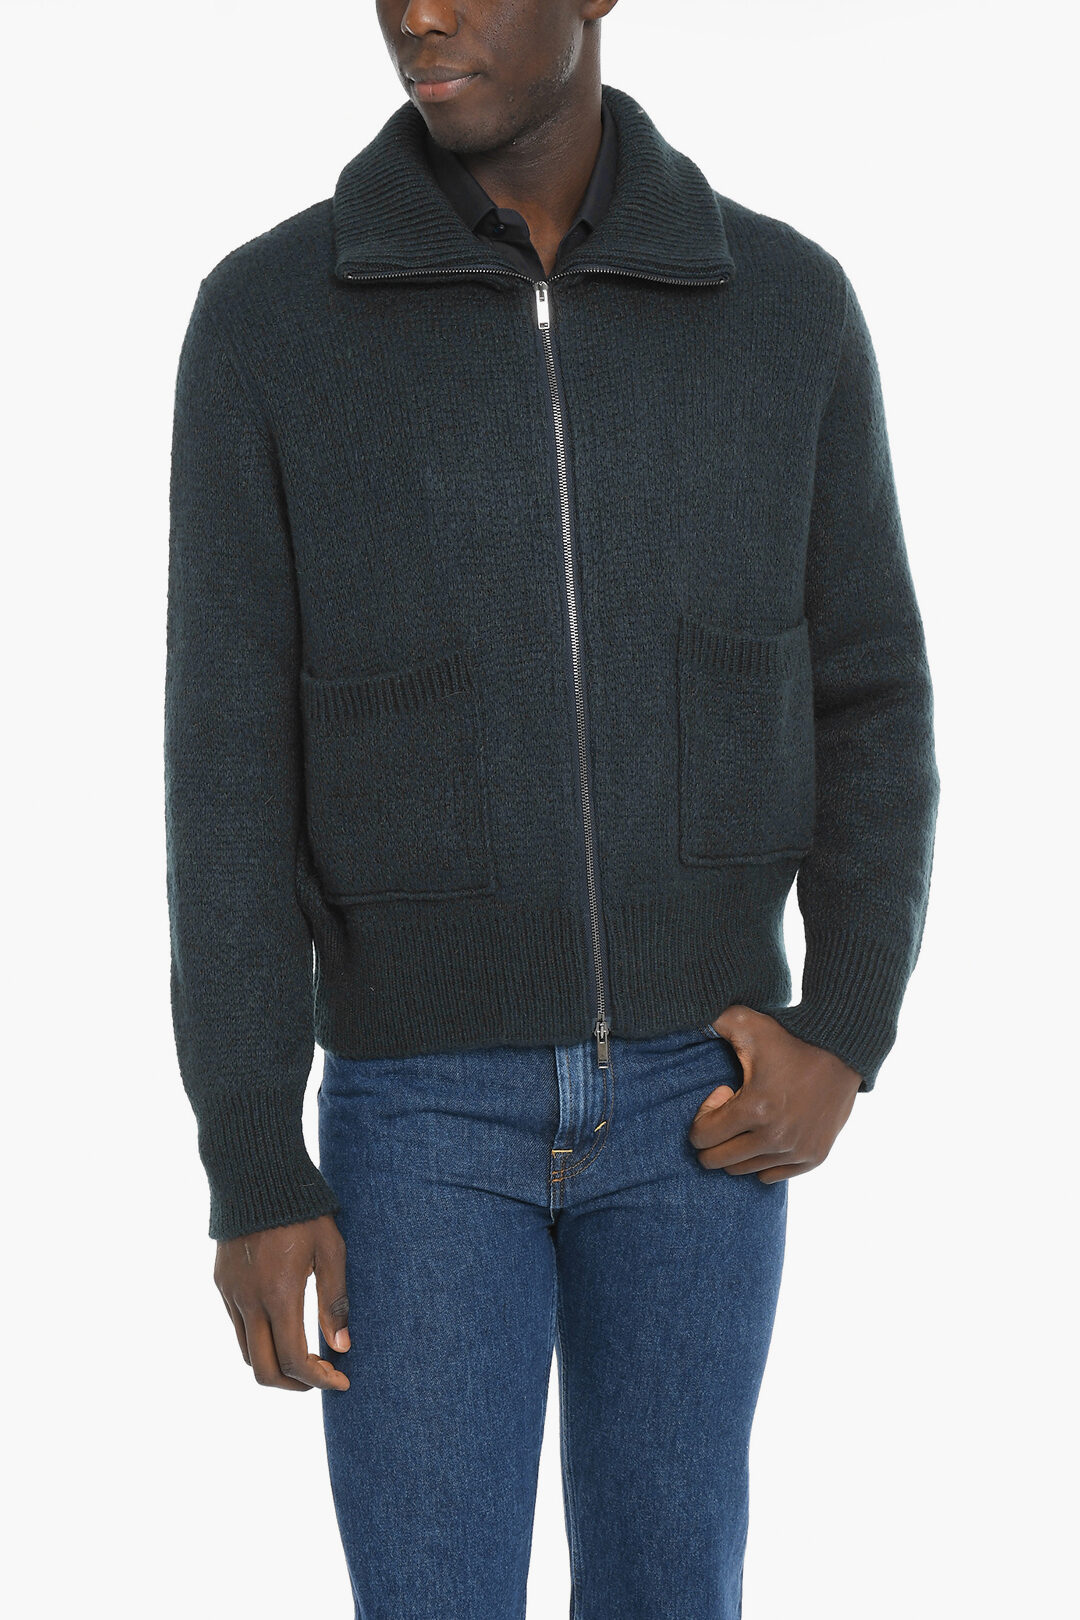 Sunhouse Patch Pockets Zipped LEO Sweater men - Glamood Outlet